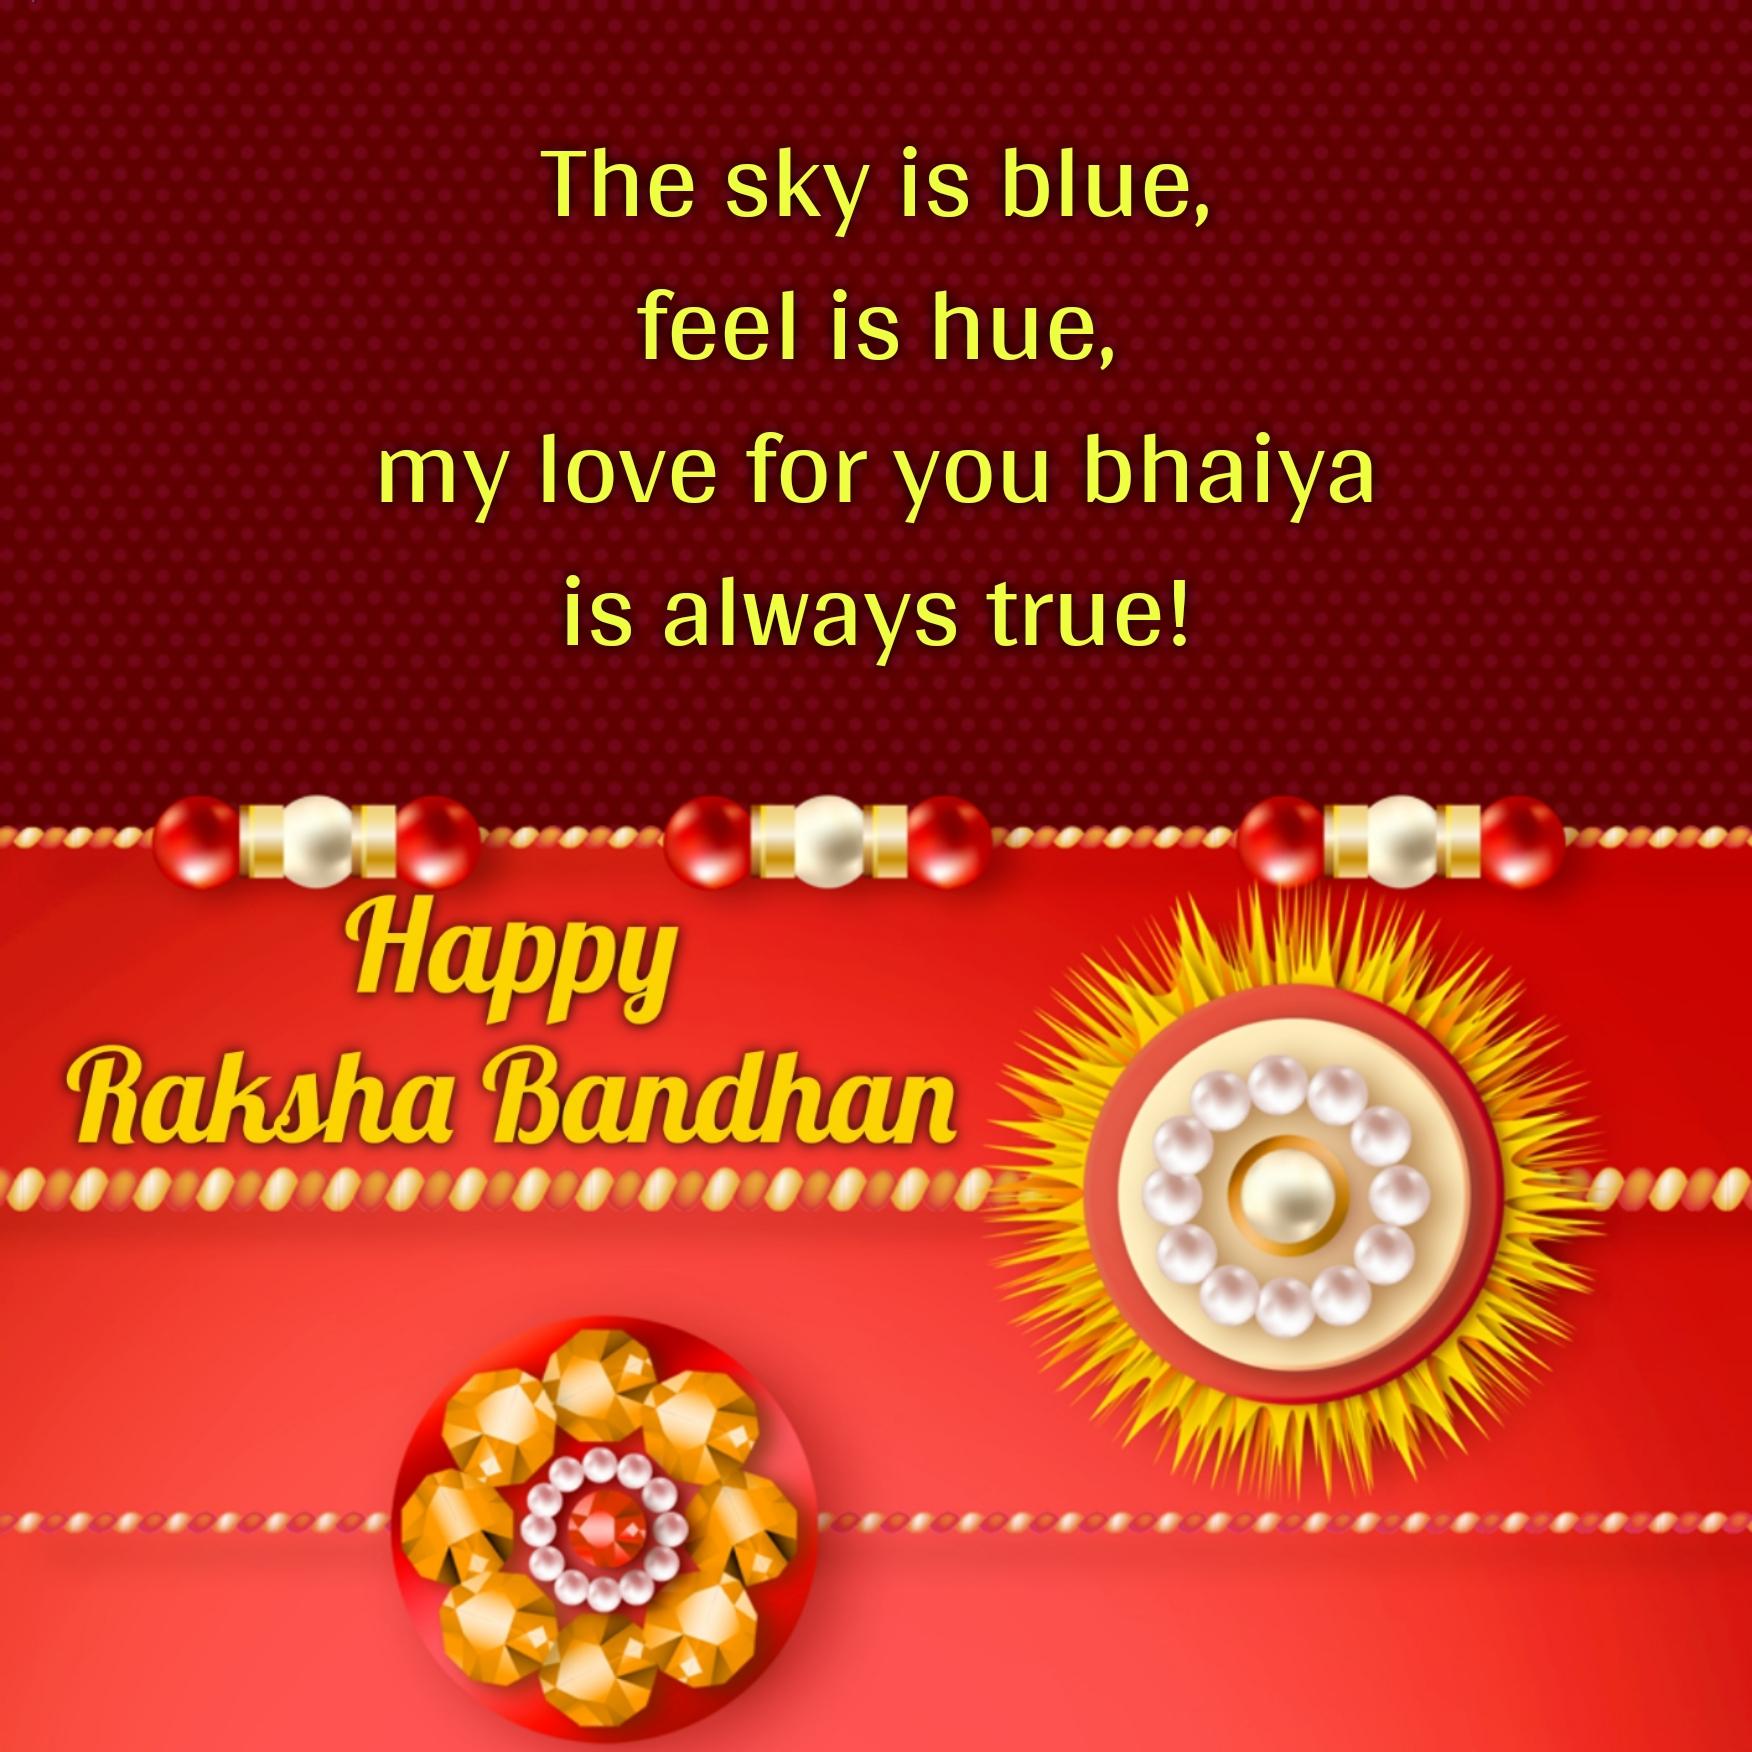 The sky is blue feel is hue my love for you bhaiya